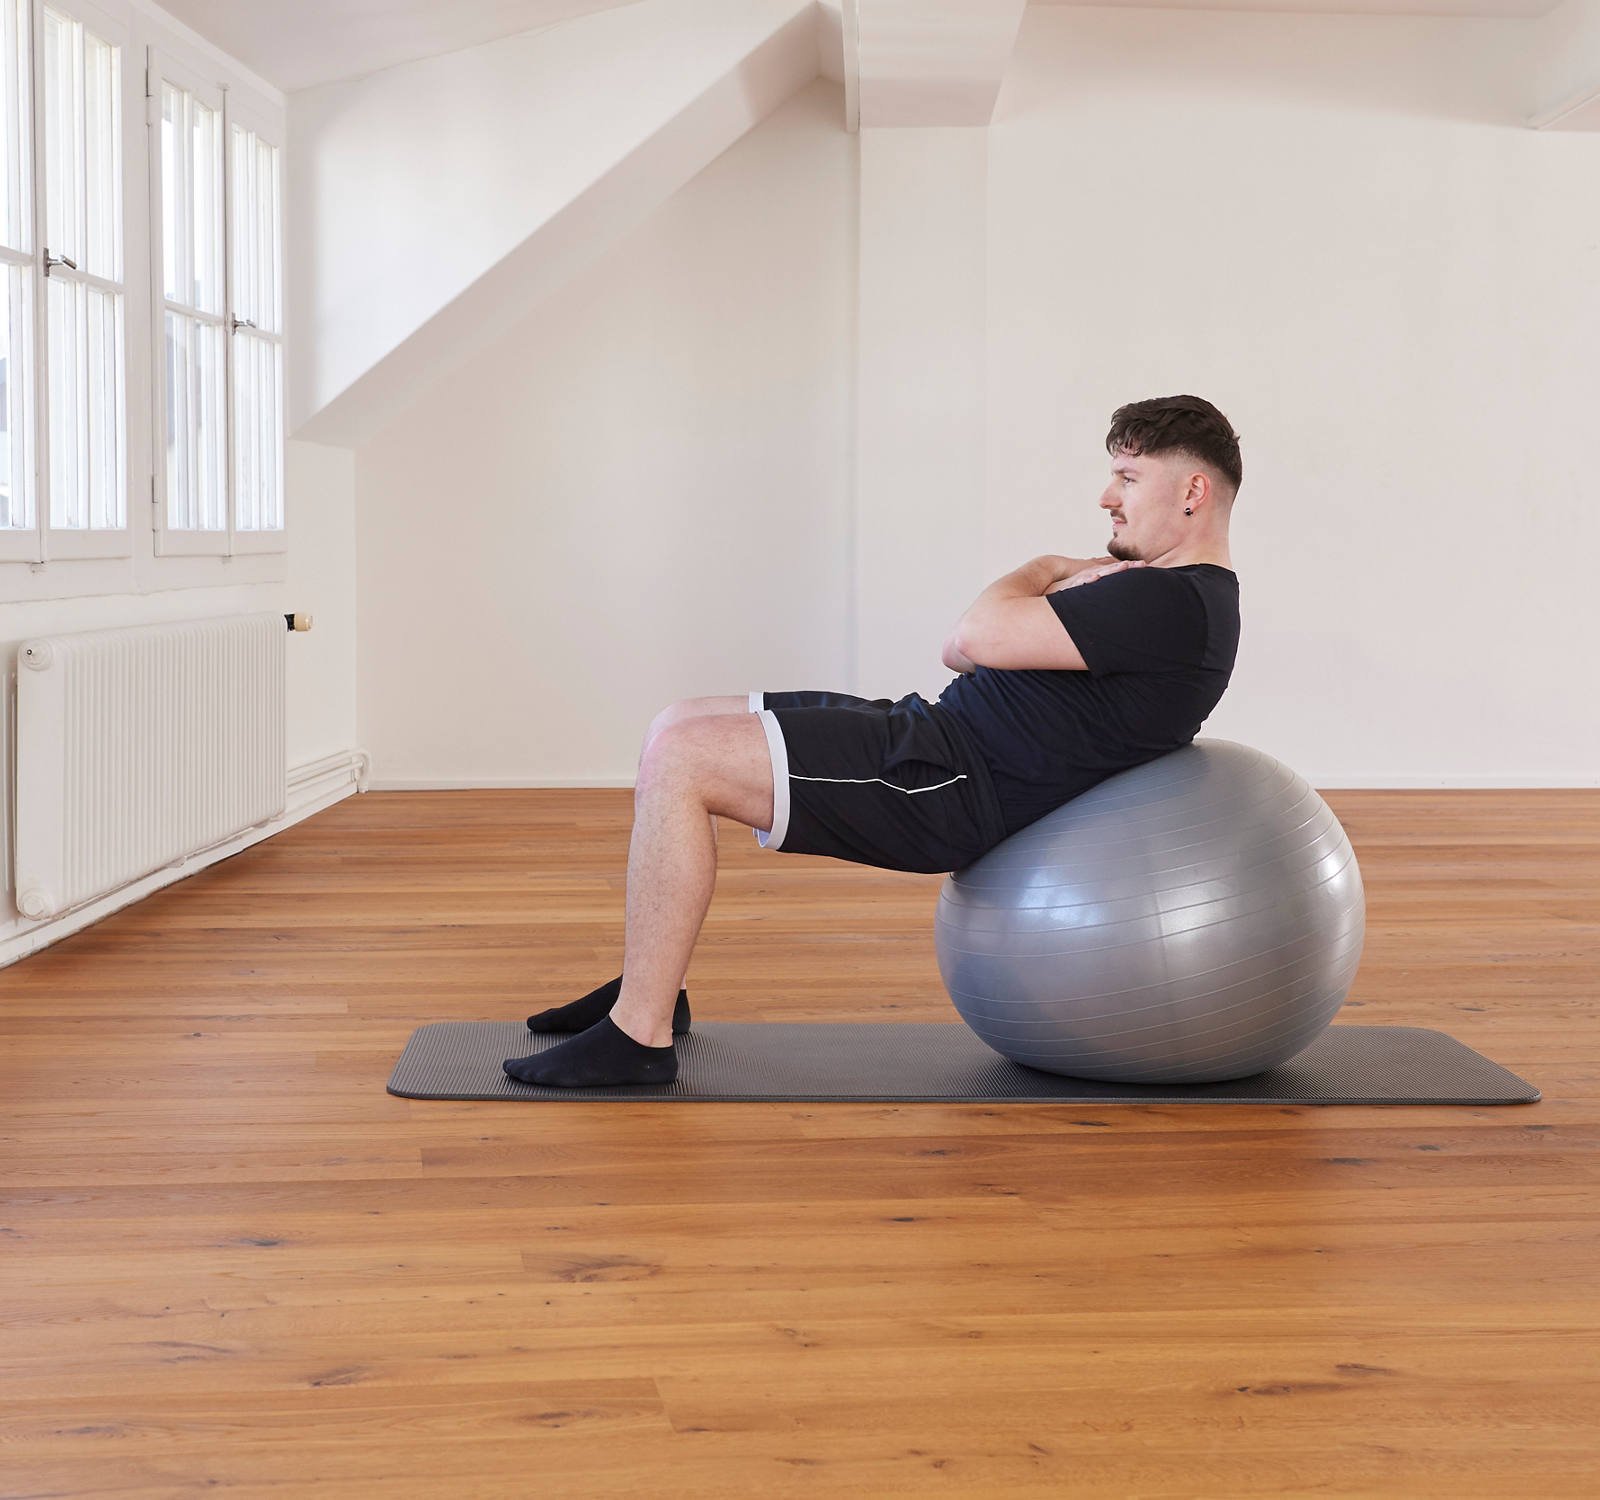 Gymnastic ball – Abdomen muscles: Position 2